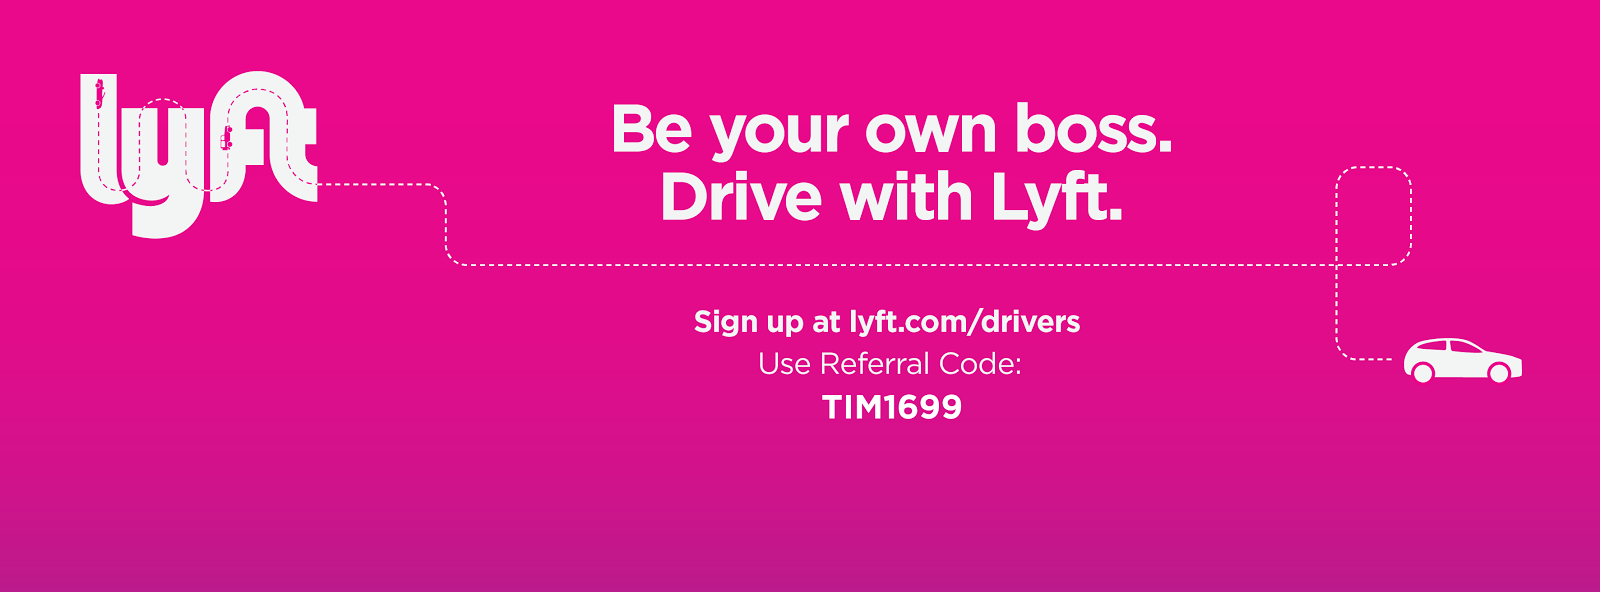 Drive with Lyft!